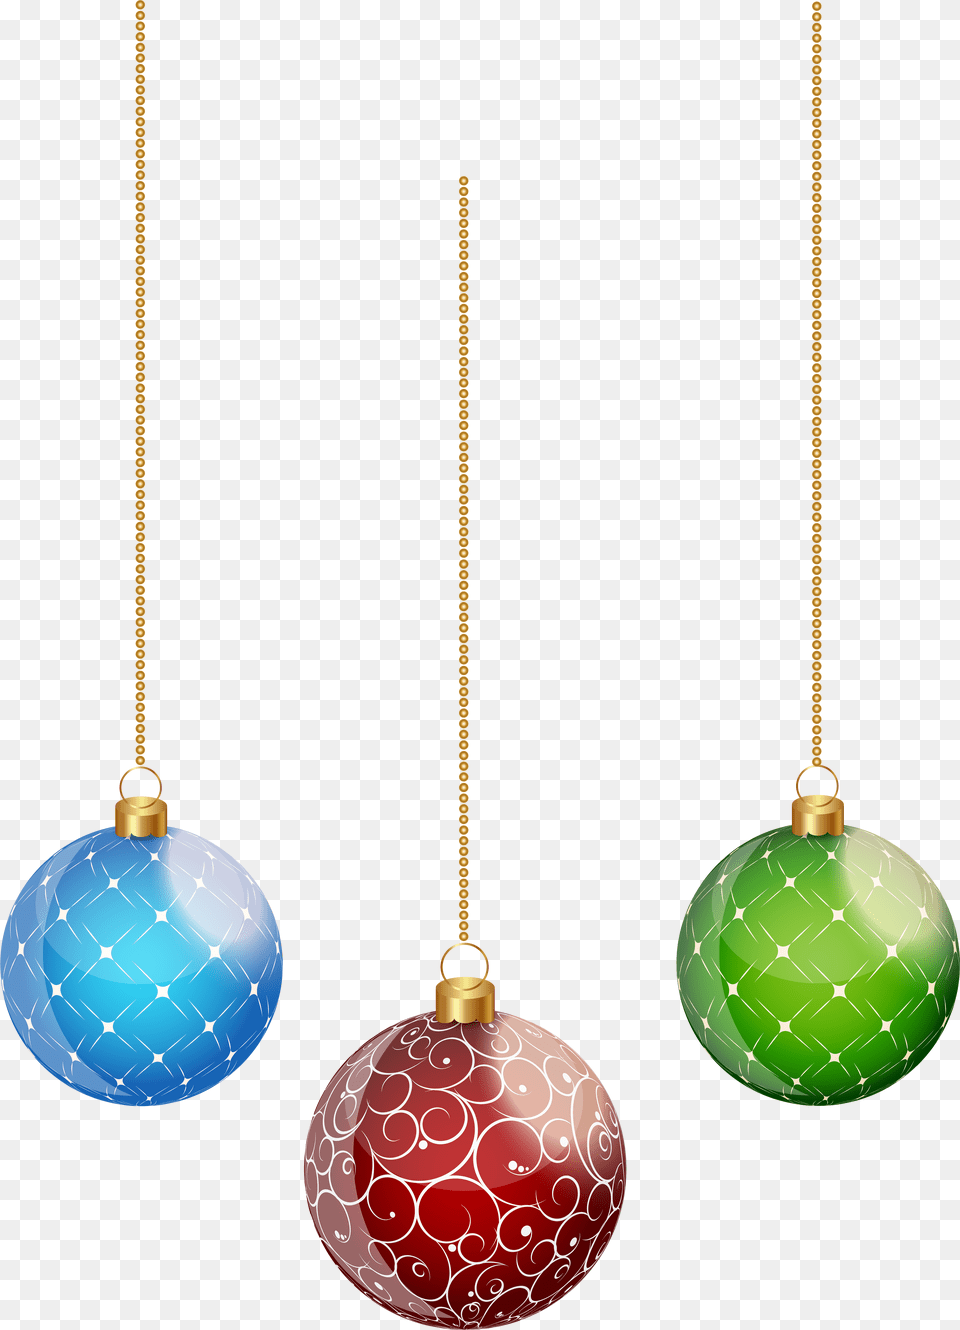 Hanging Christmas Balls Clip Artu200b Portable Network Graphics, Computer Hardware, Electronics, Hardware, Wristwatch Free Transparent Png